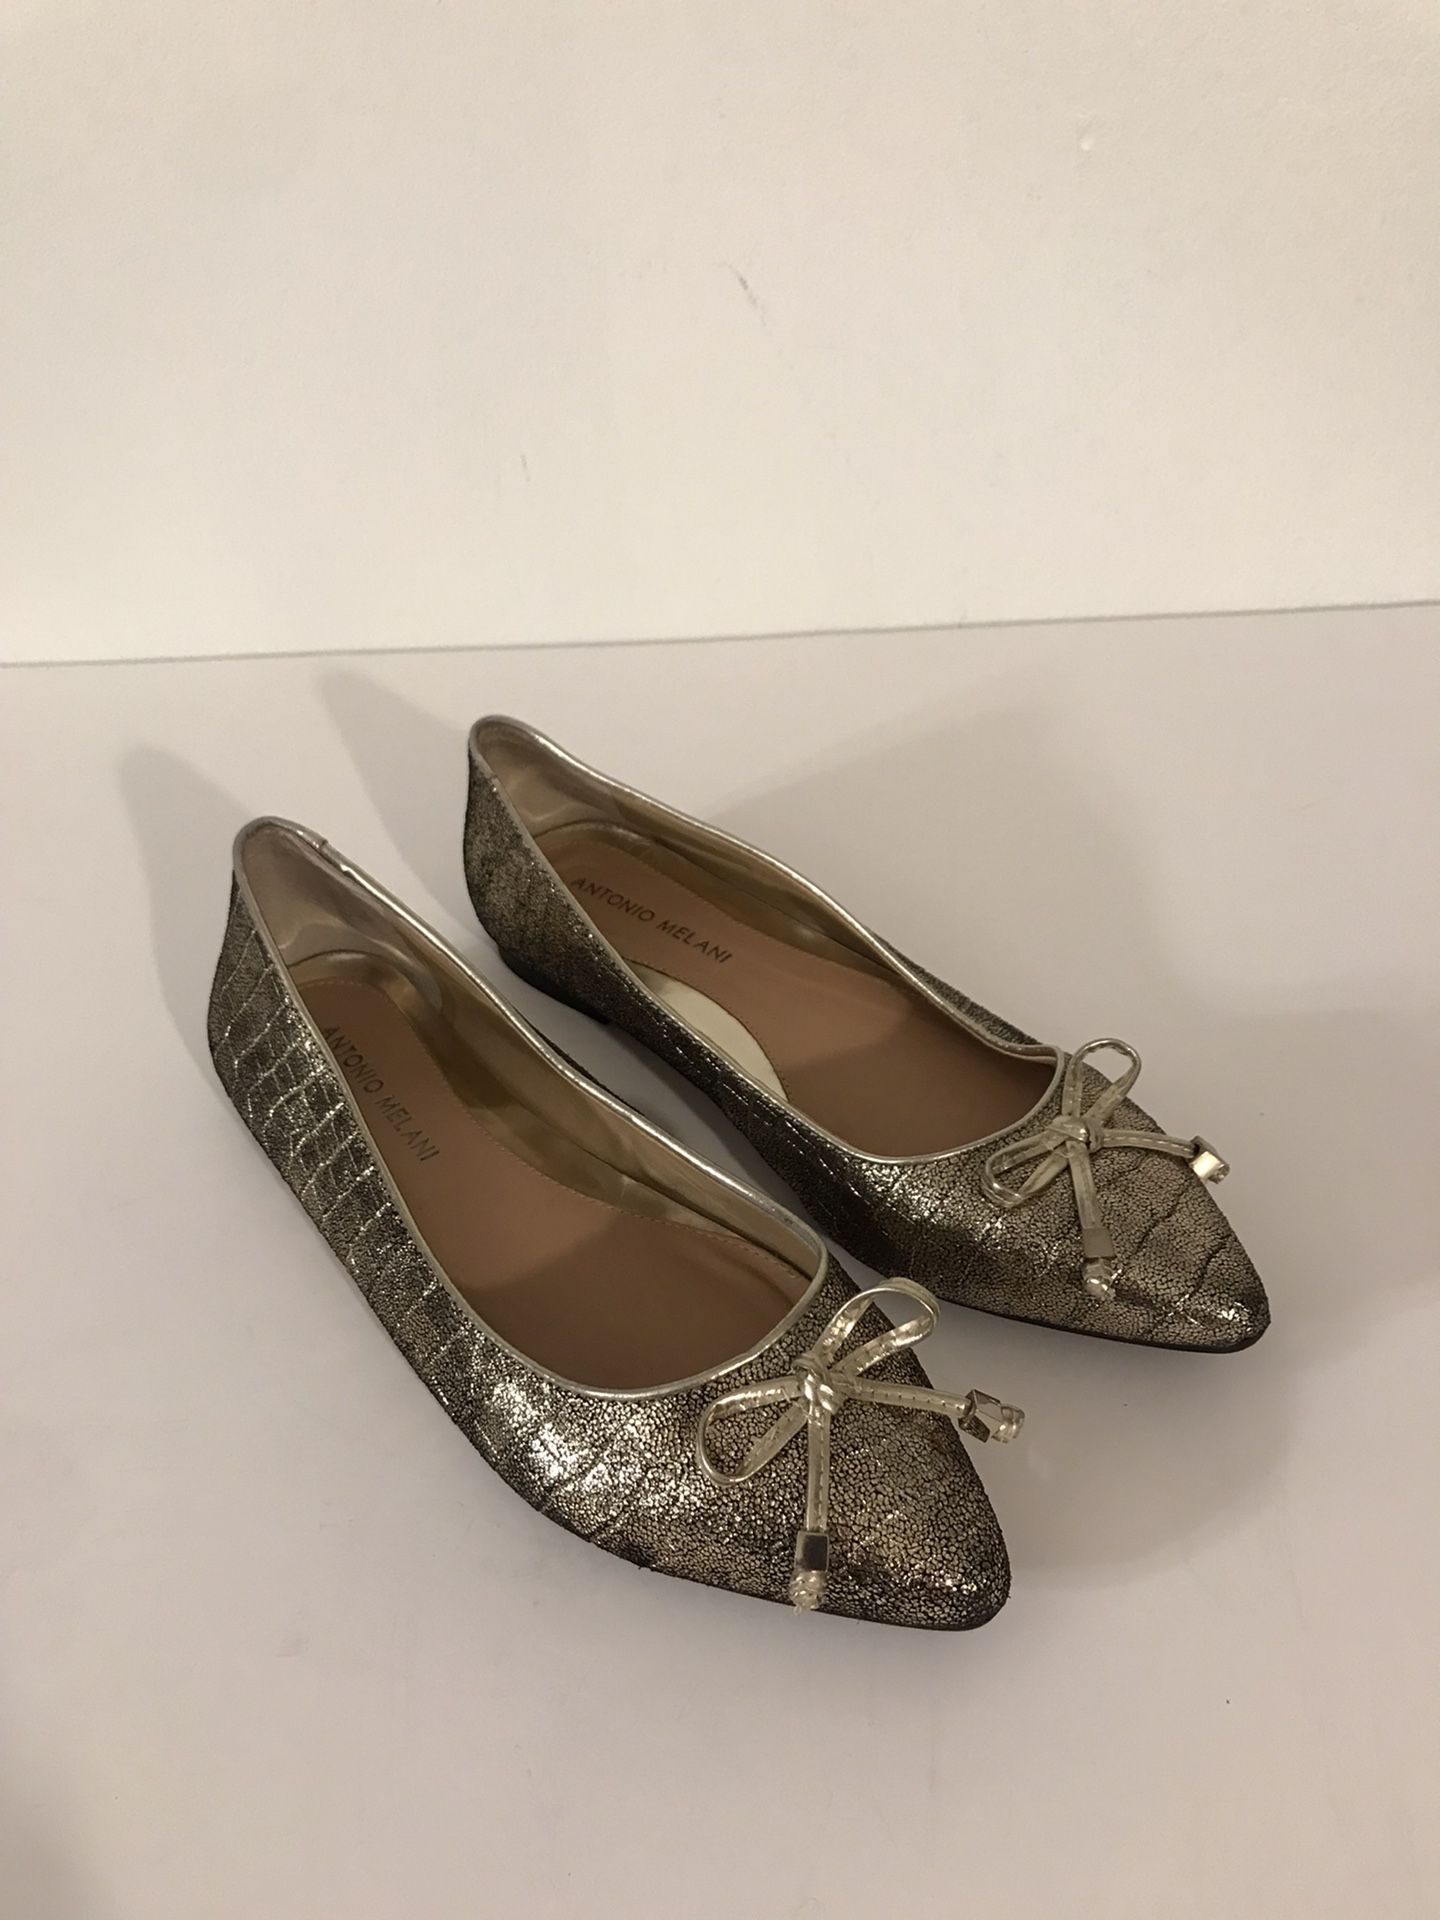 Antonio Melani Women’s Metallic Gold Crocodile Embossed Leather Flats Size 8.5 M